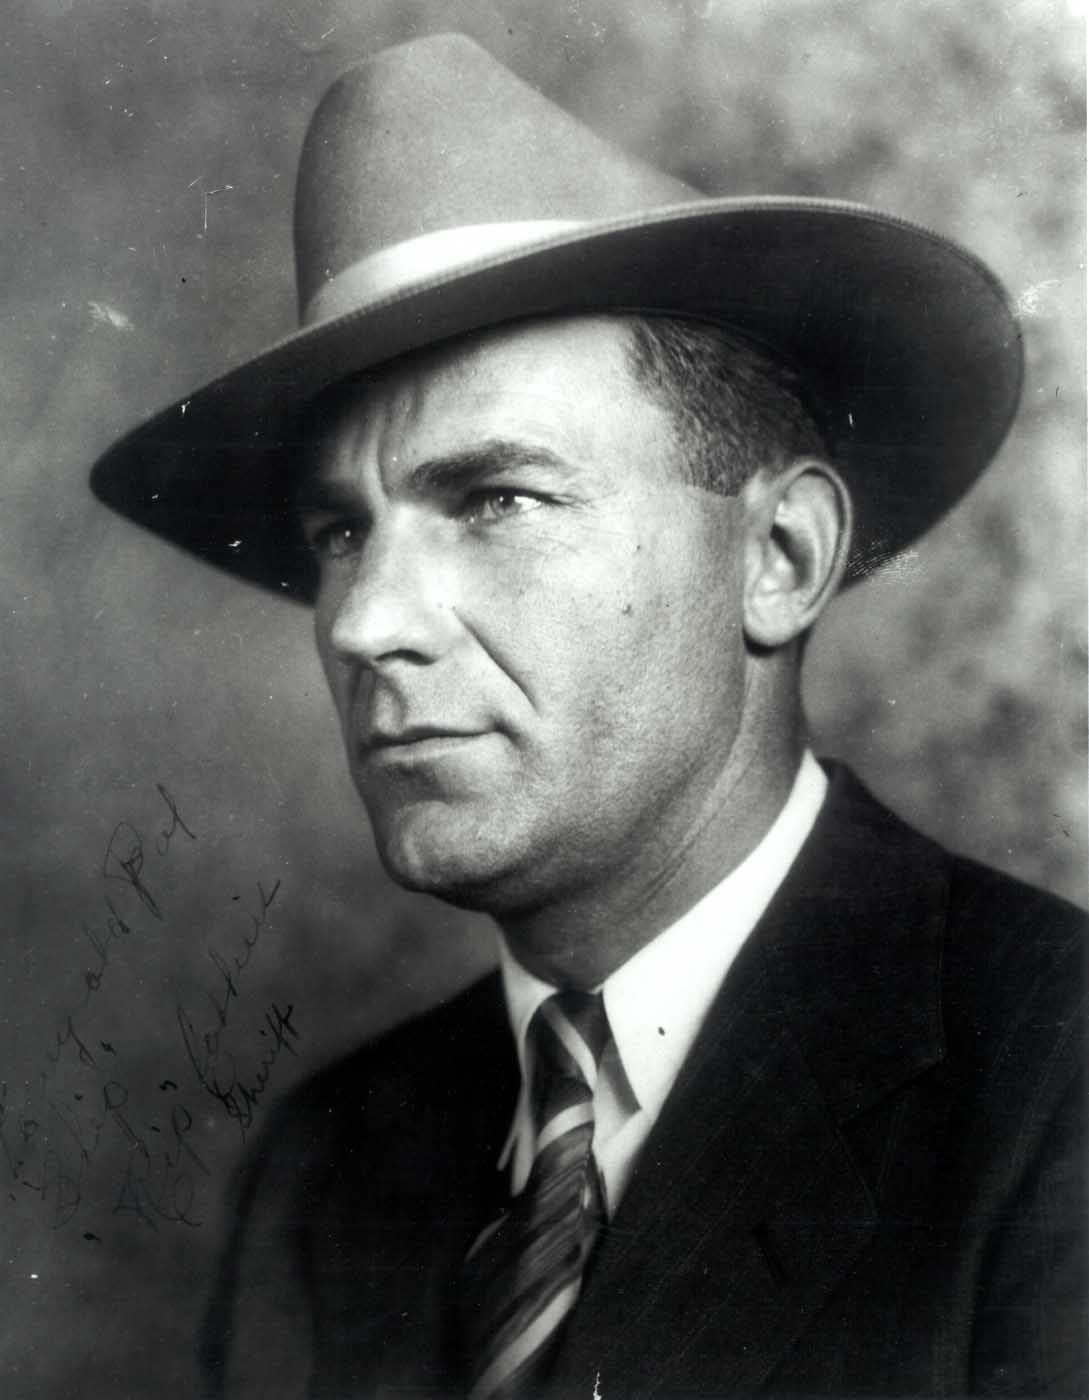 Sheriff H.W. "Rip" Collins